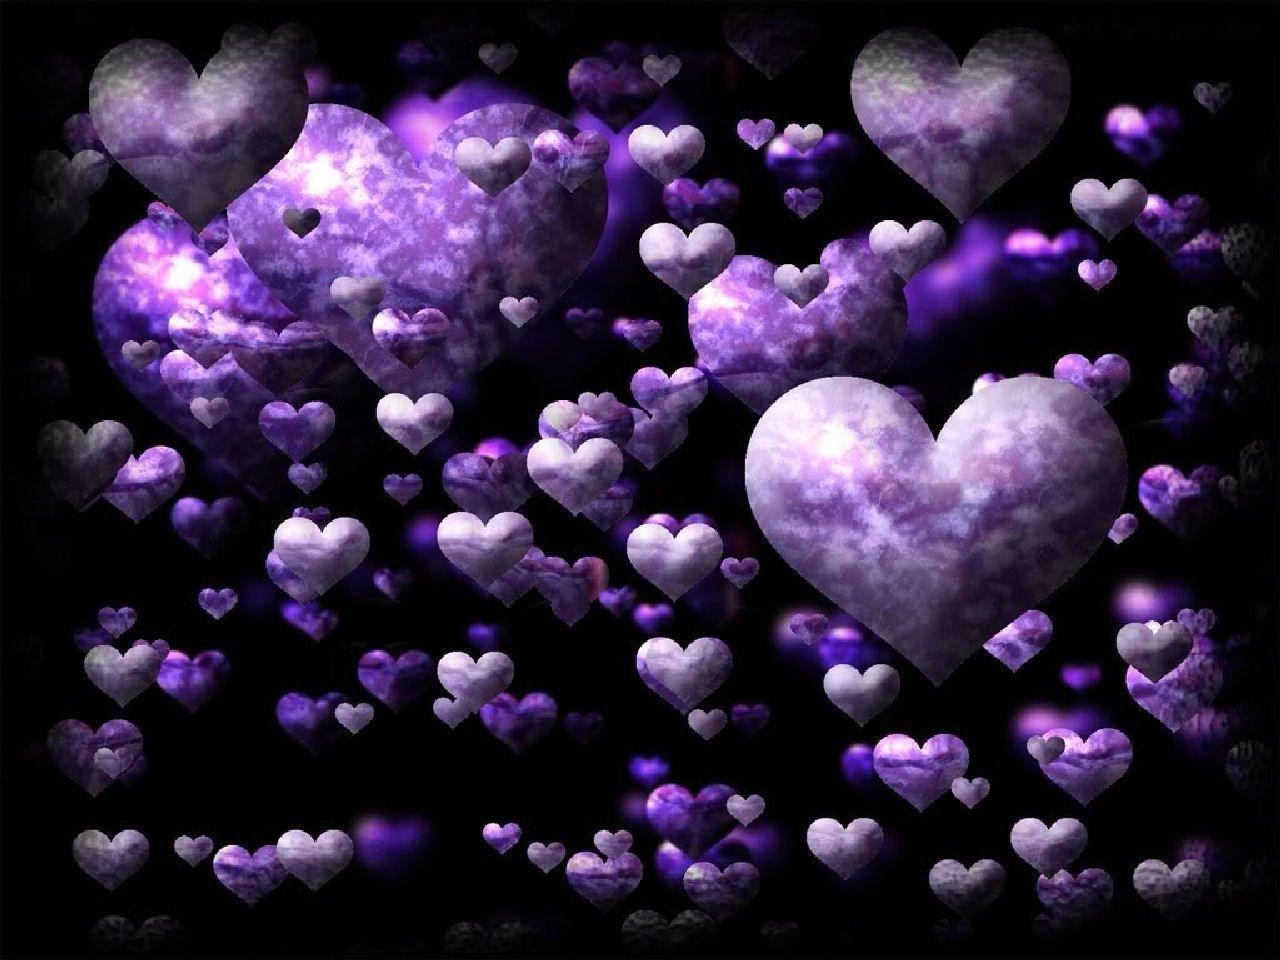 Wallpaper For > Purple Hearts Wallpaper